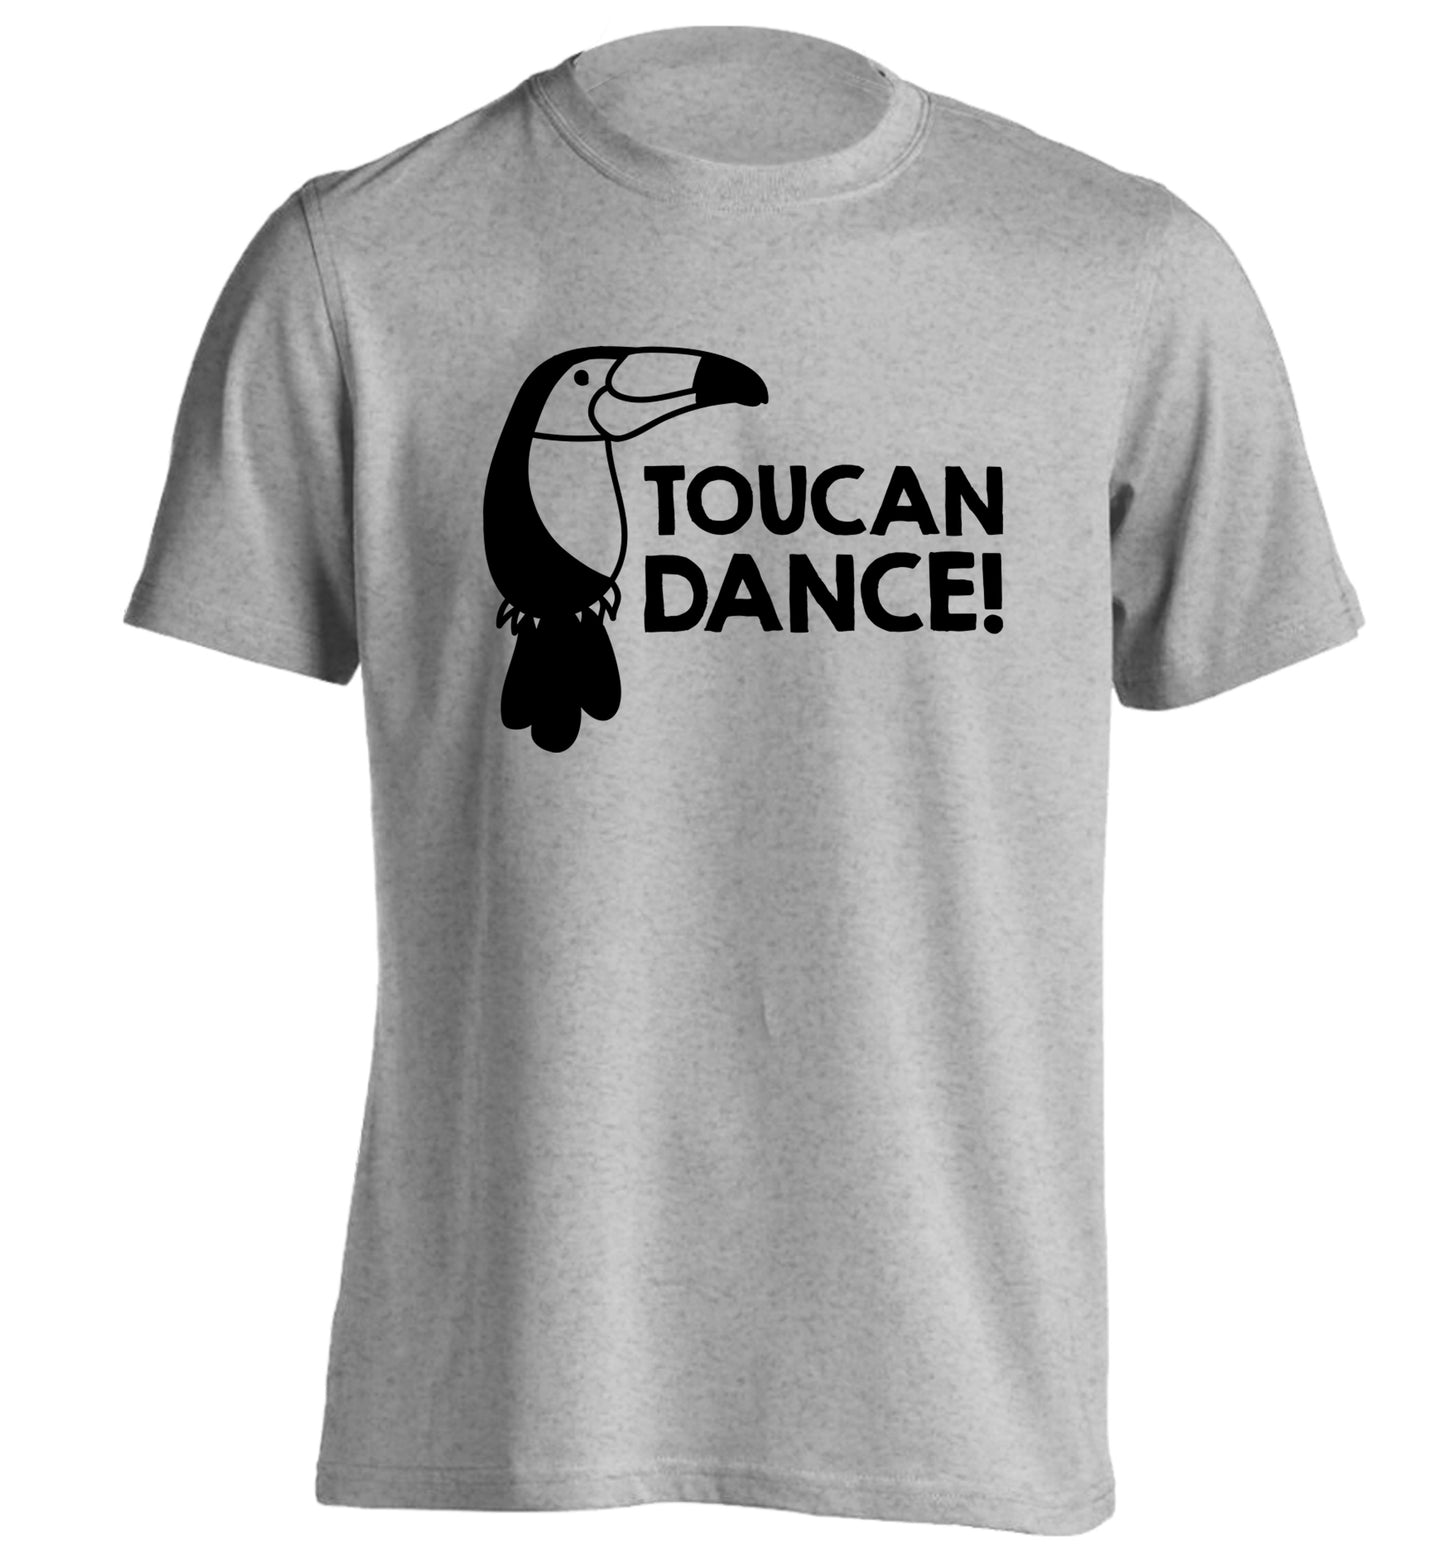 Toucan dance adults unisex grey Tshirt 2XL